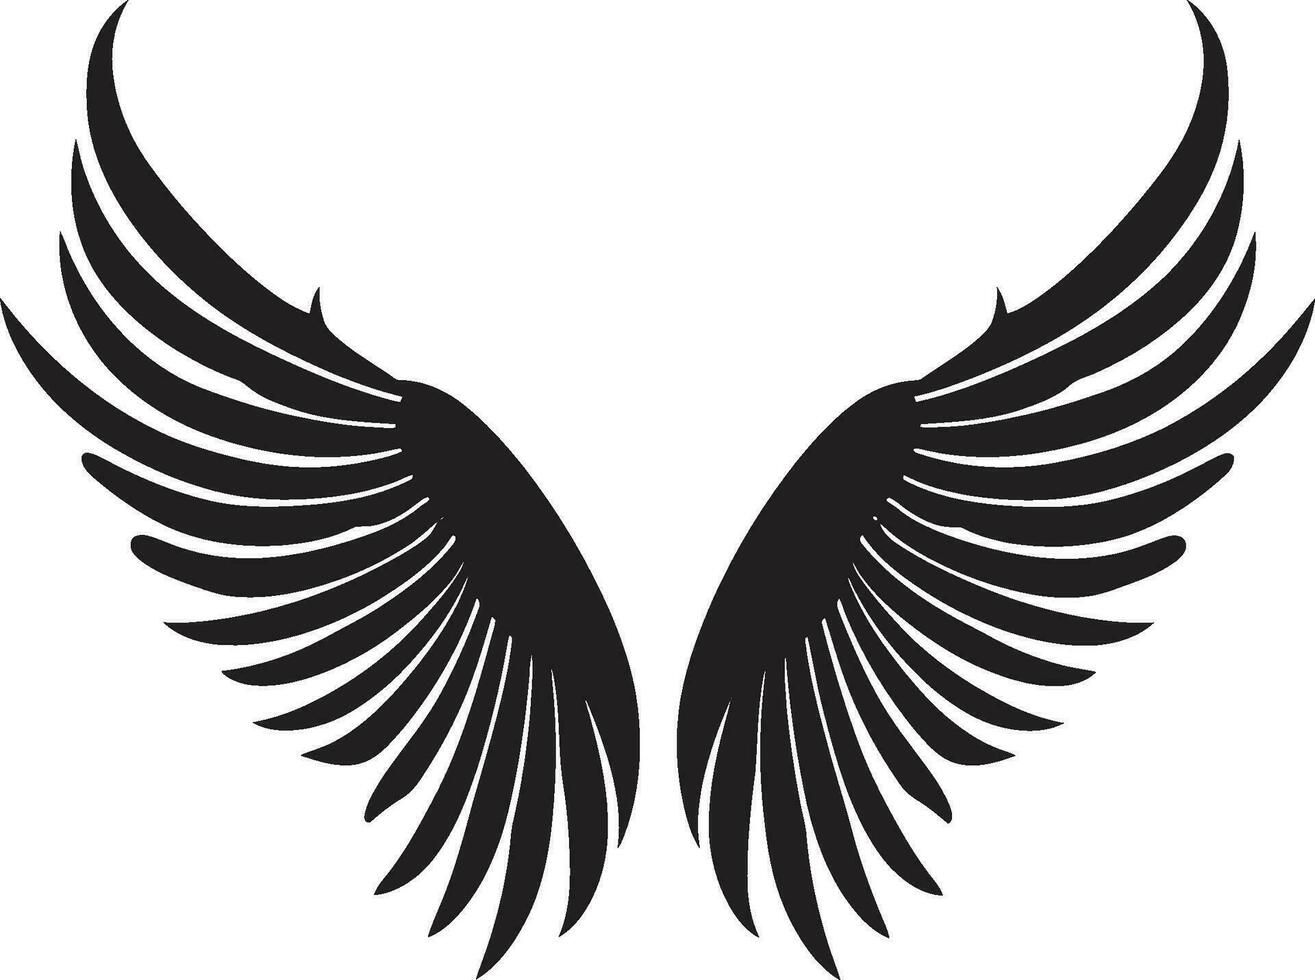 Celestial Feathers Logo of Angel Wings Seraphic Soar Angel Wings Icon Vector